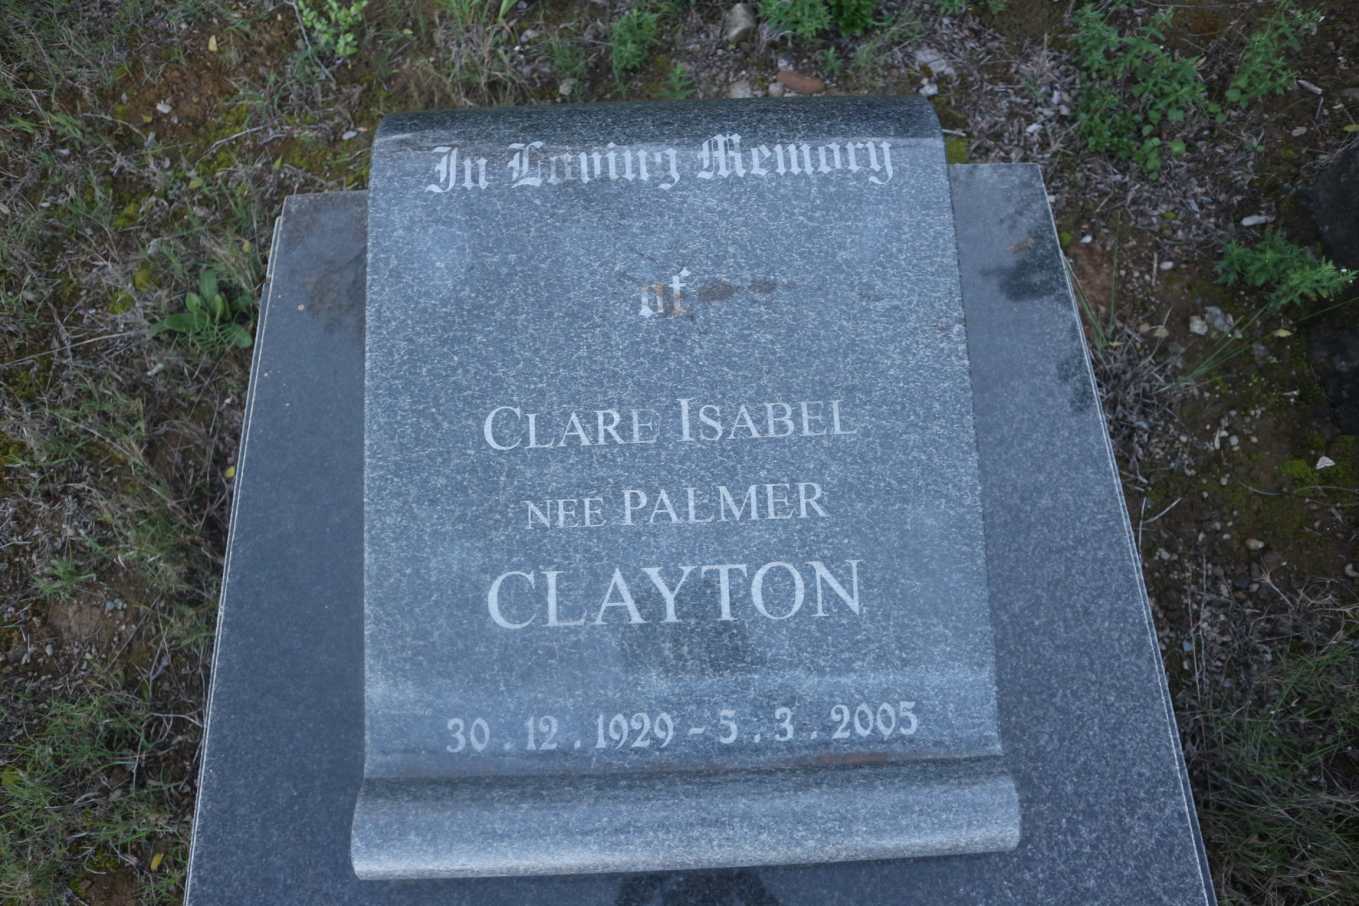 CLAYTON Clare Isabel nee PALMER 1929-2005